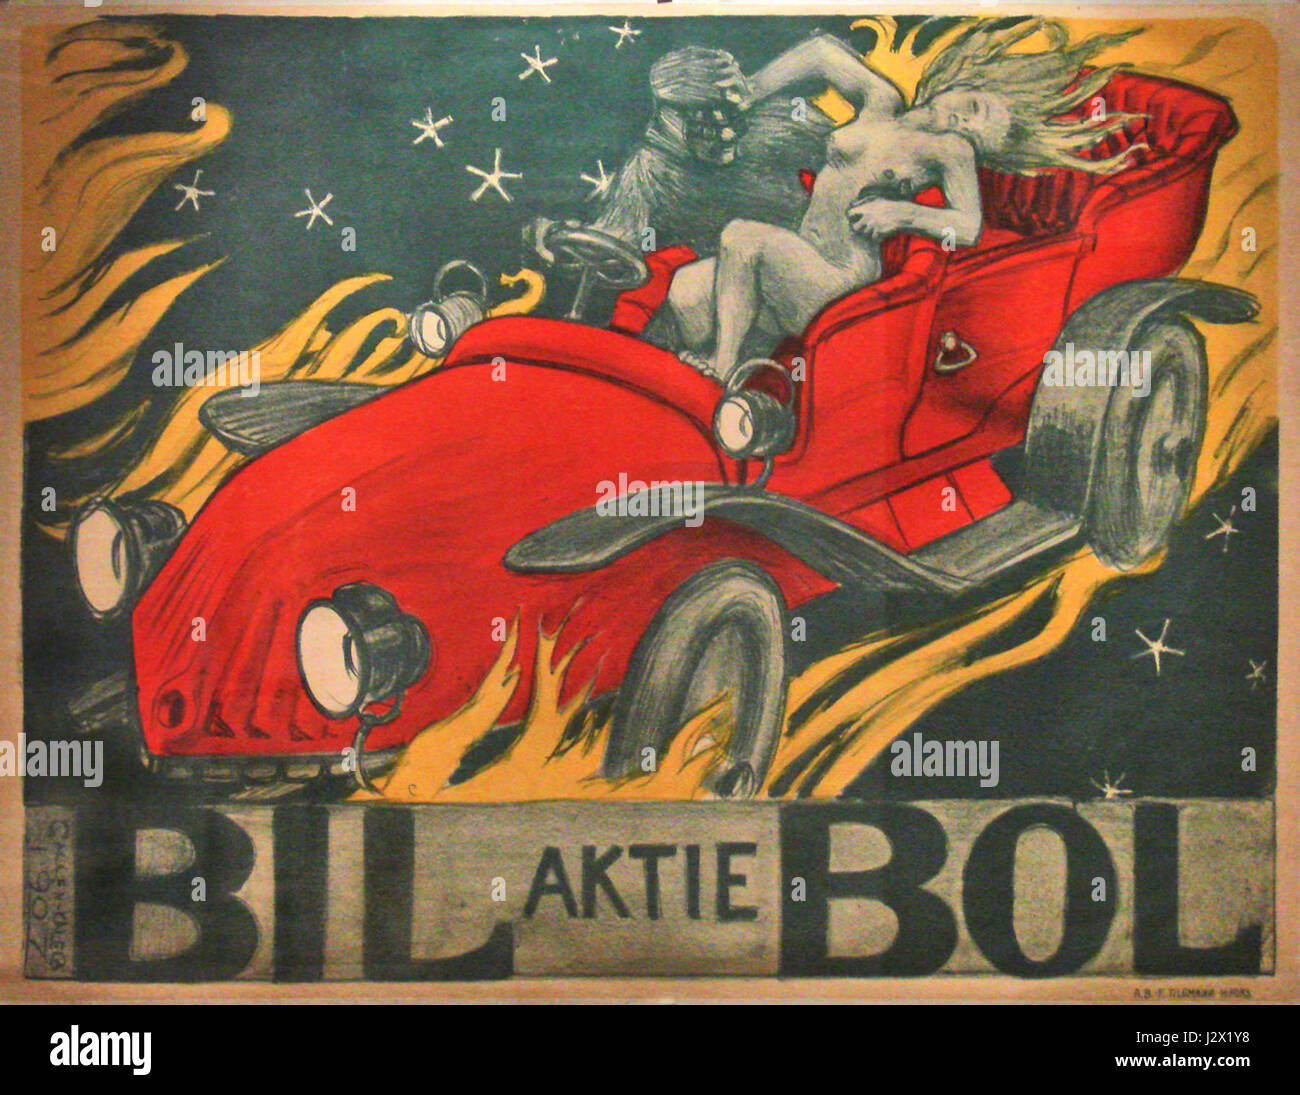 Affiche Bilbol (Akseli Gallen-Kallela) Stock Photo